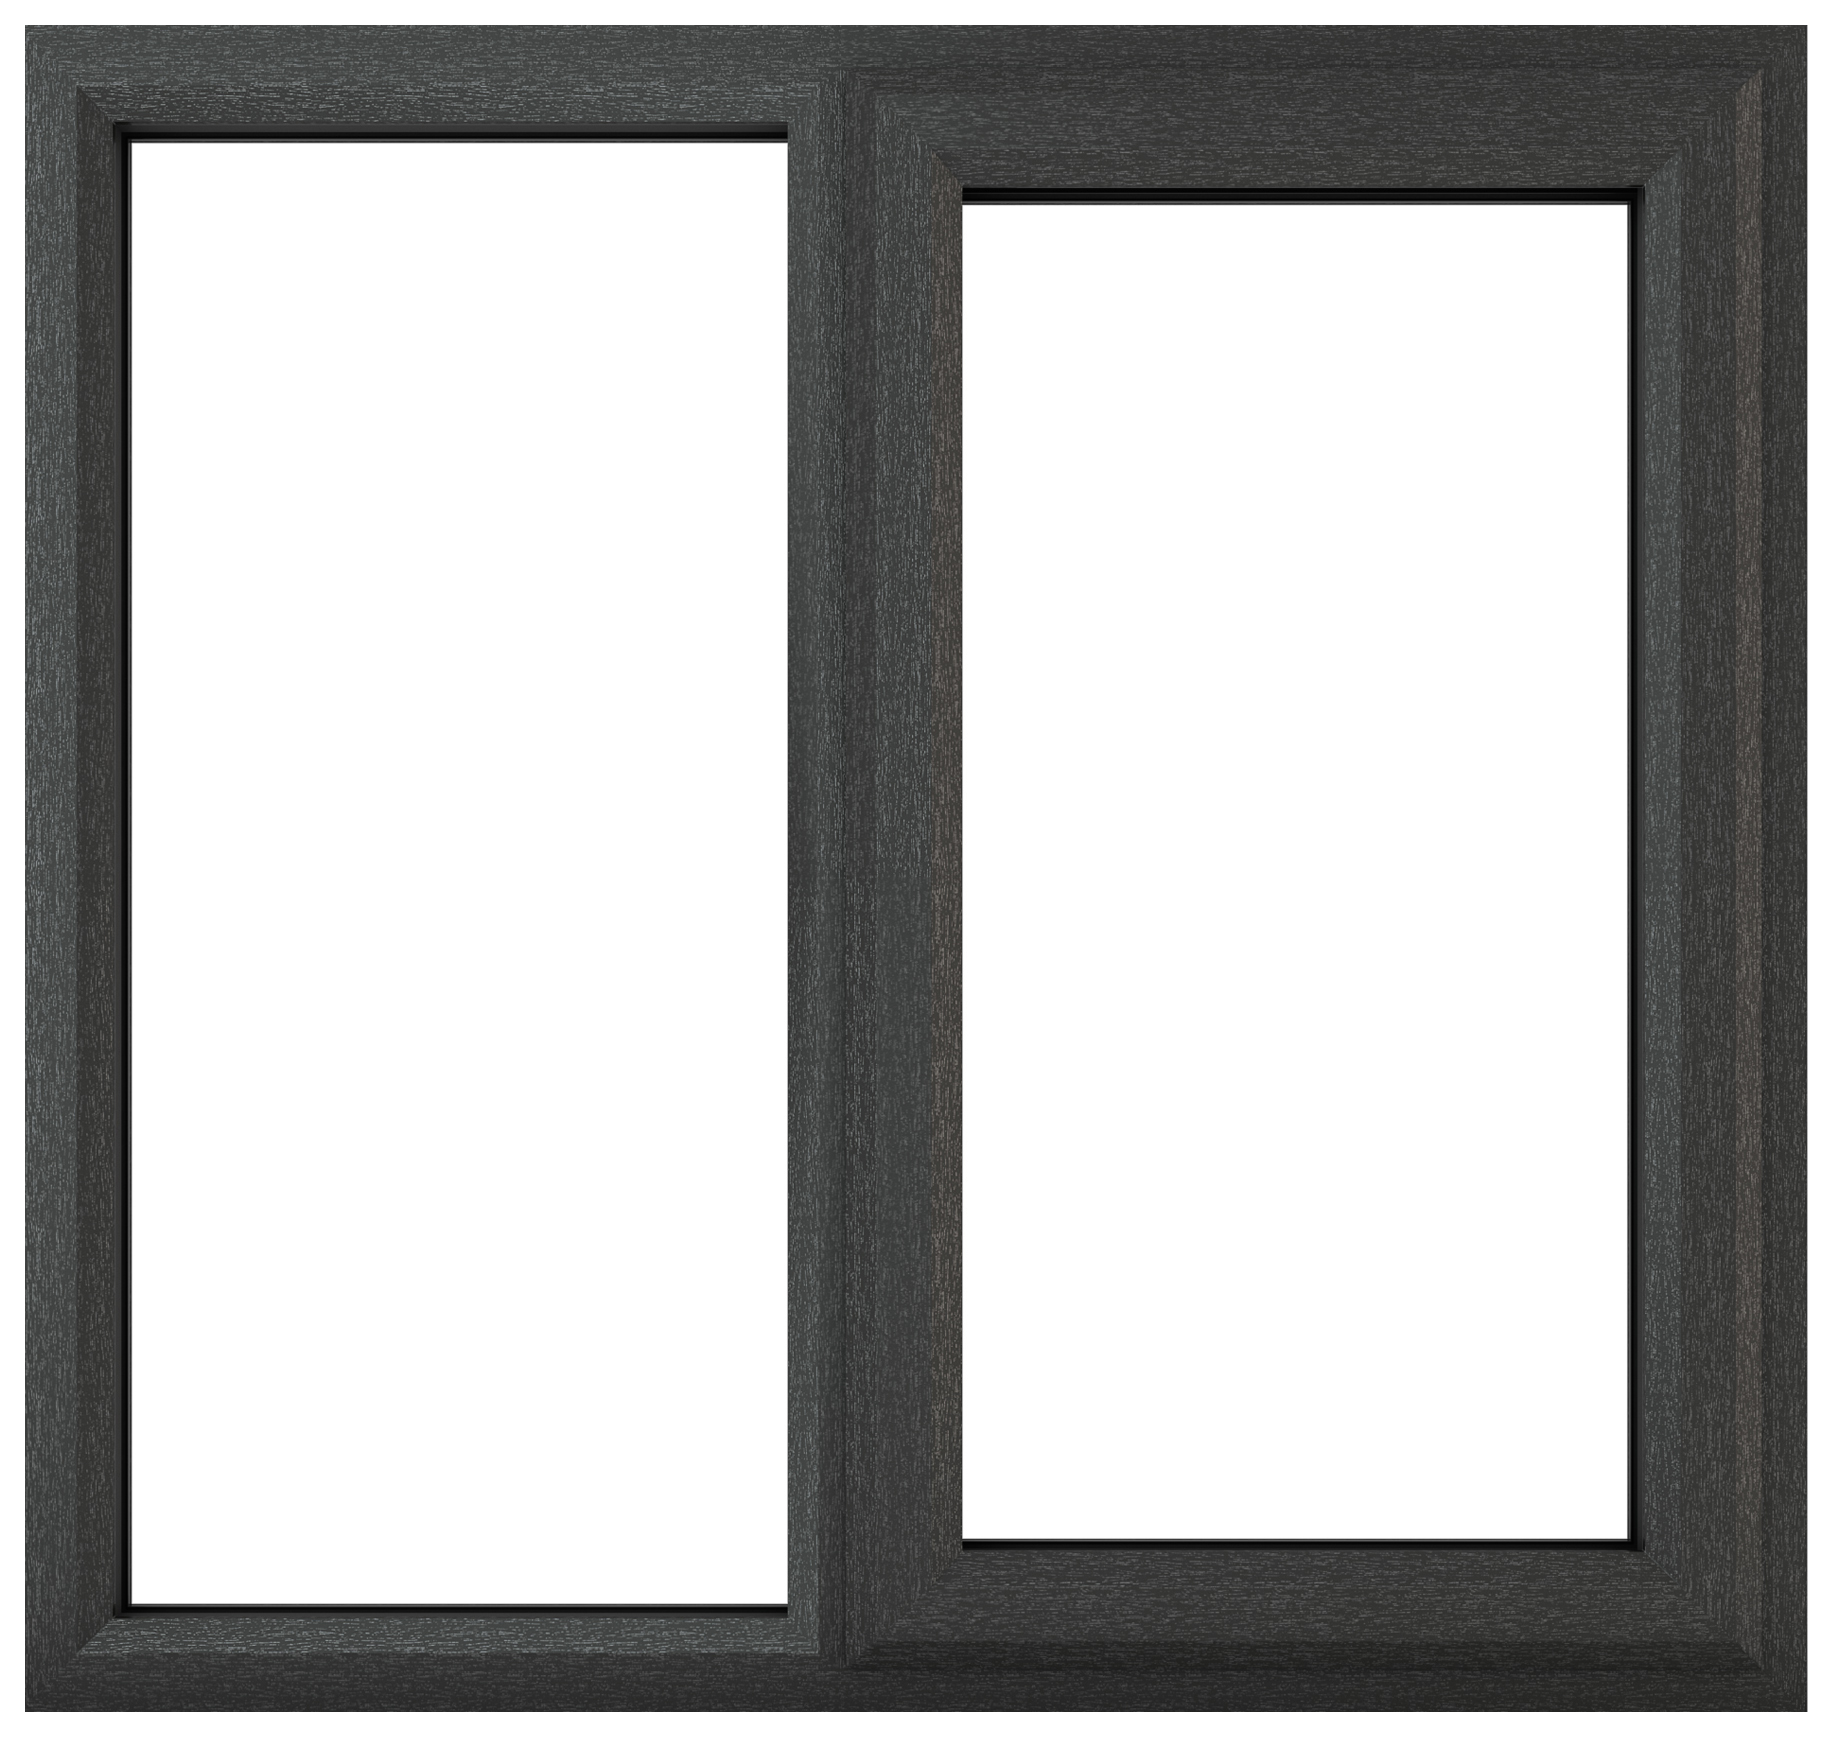 Crystal uPVC Grey / White Right Hung Clear Triple Glazed Window - 905 x 965mm